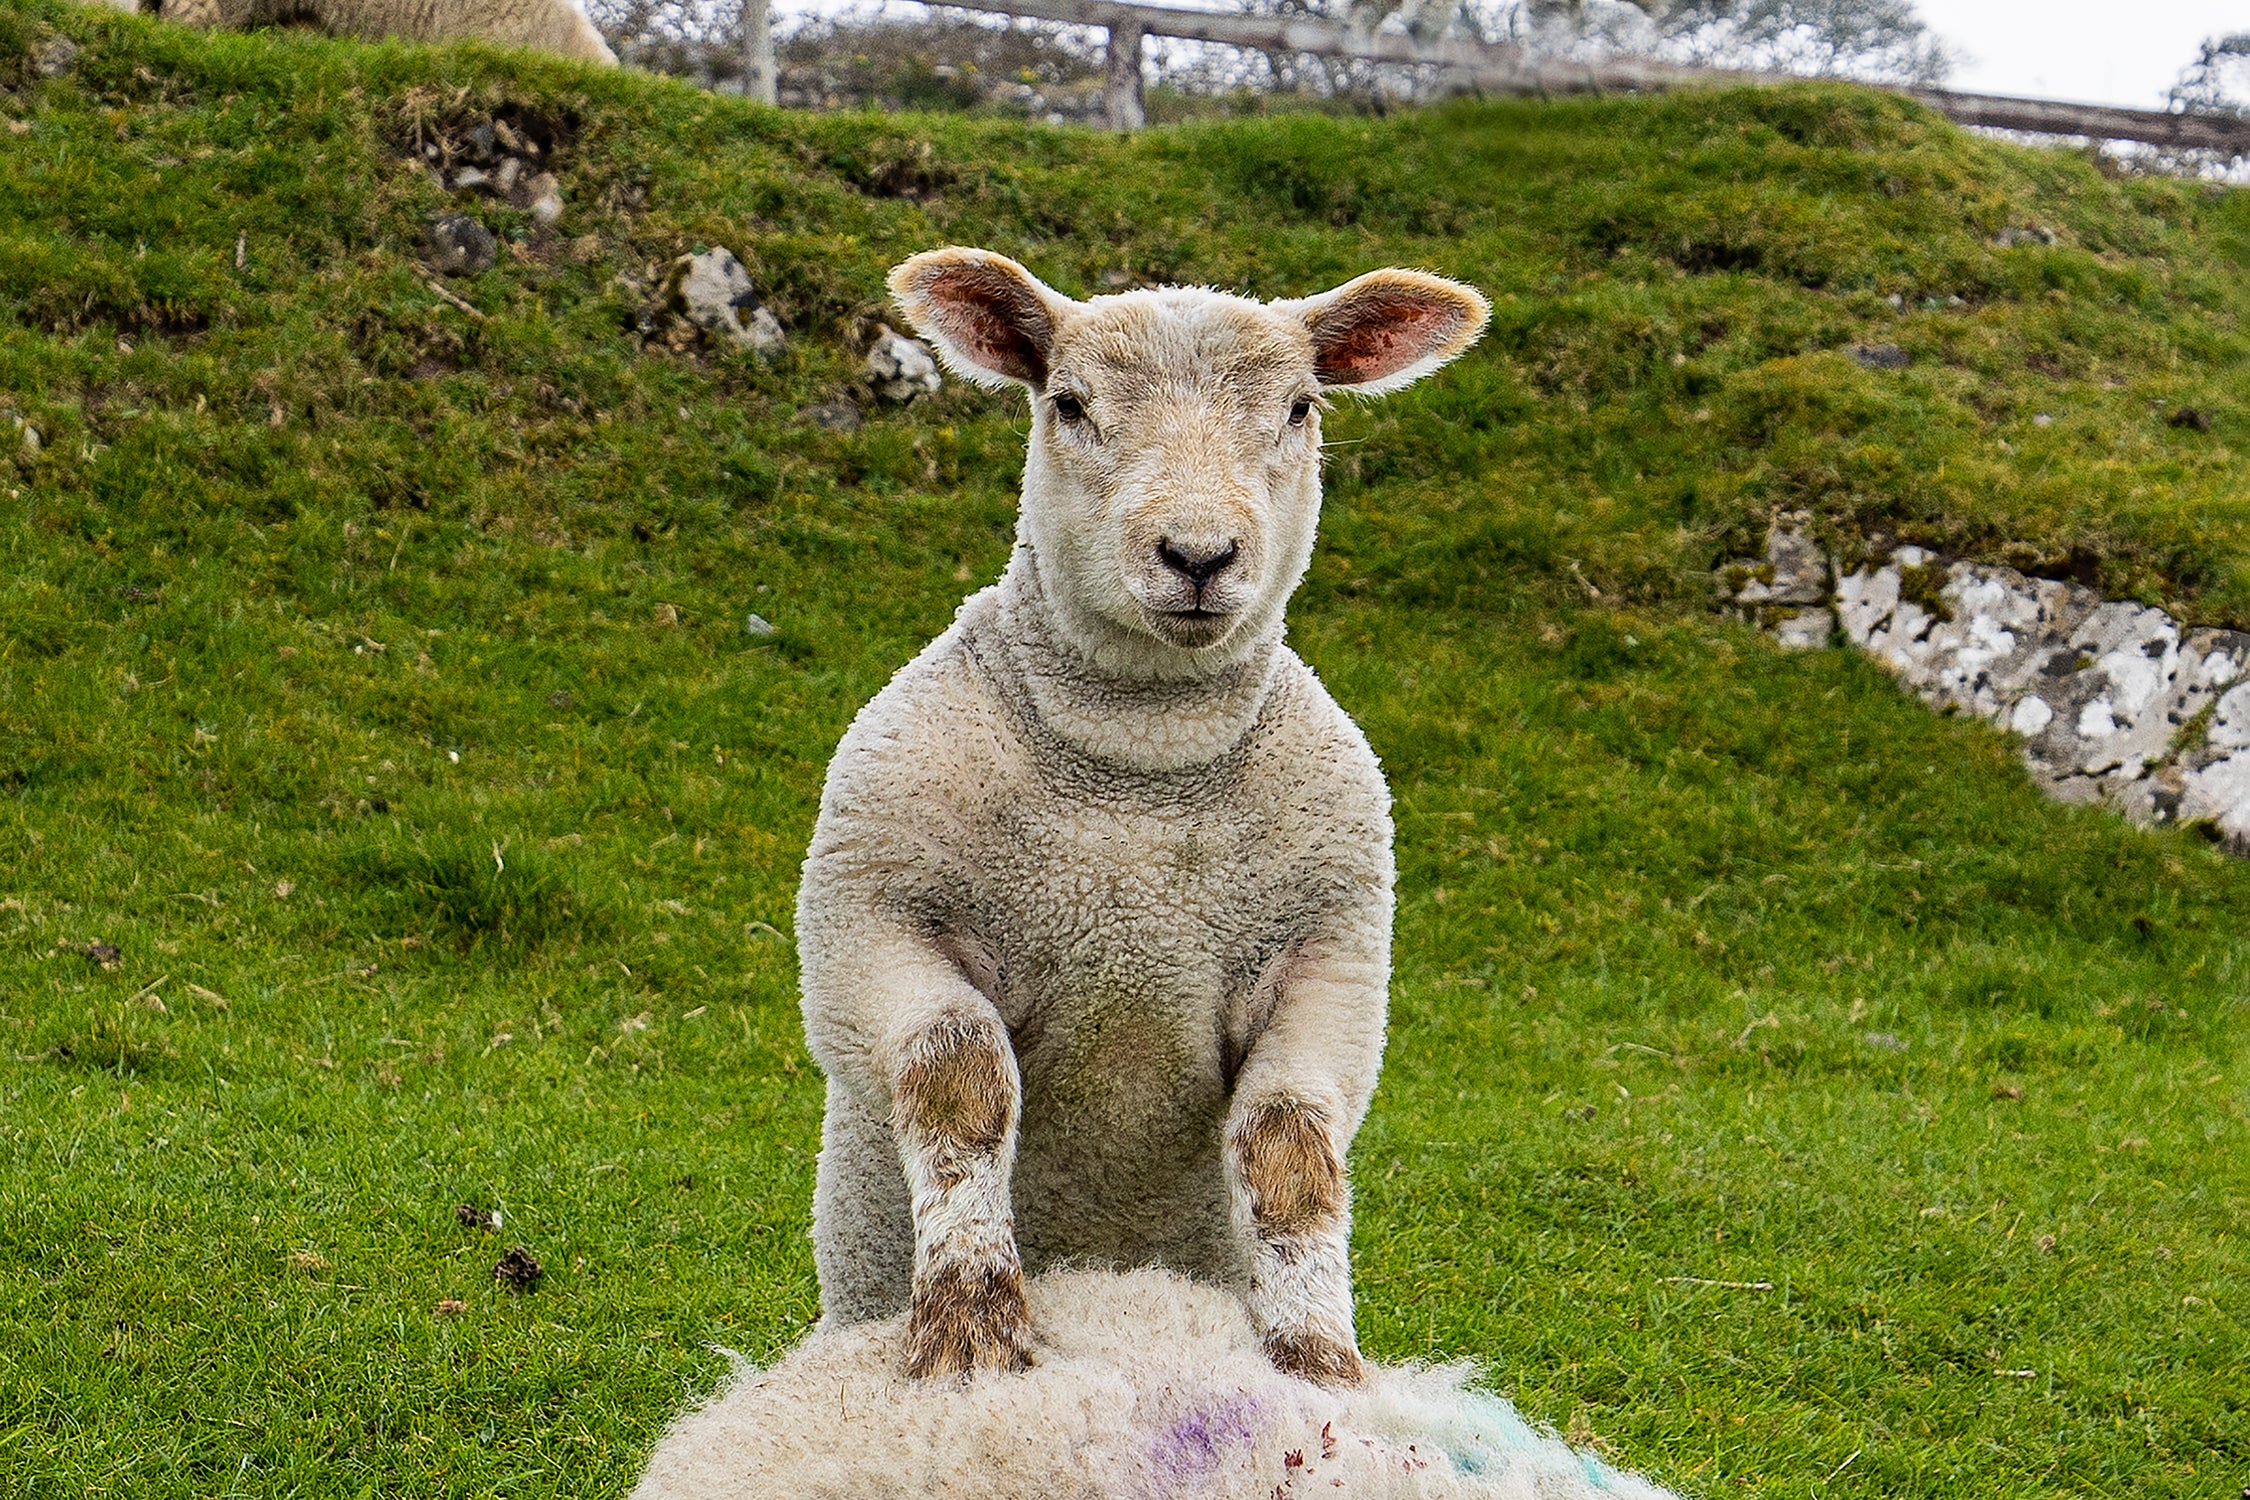 Lamb Taking a closer Look